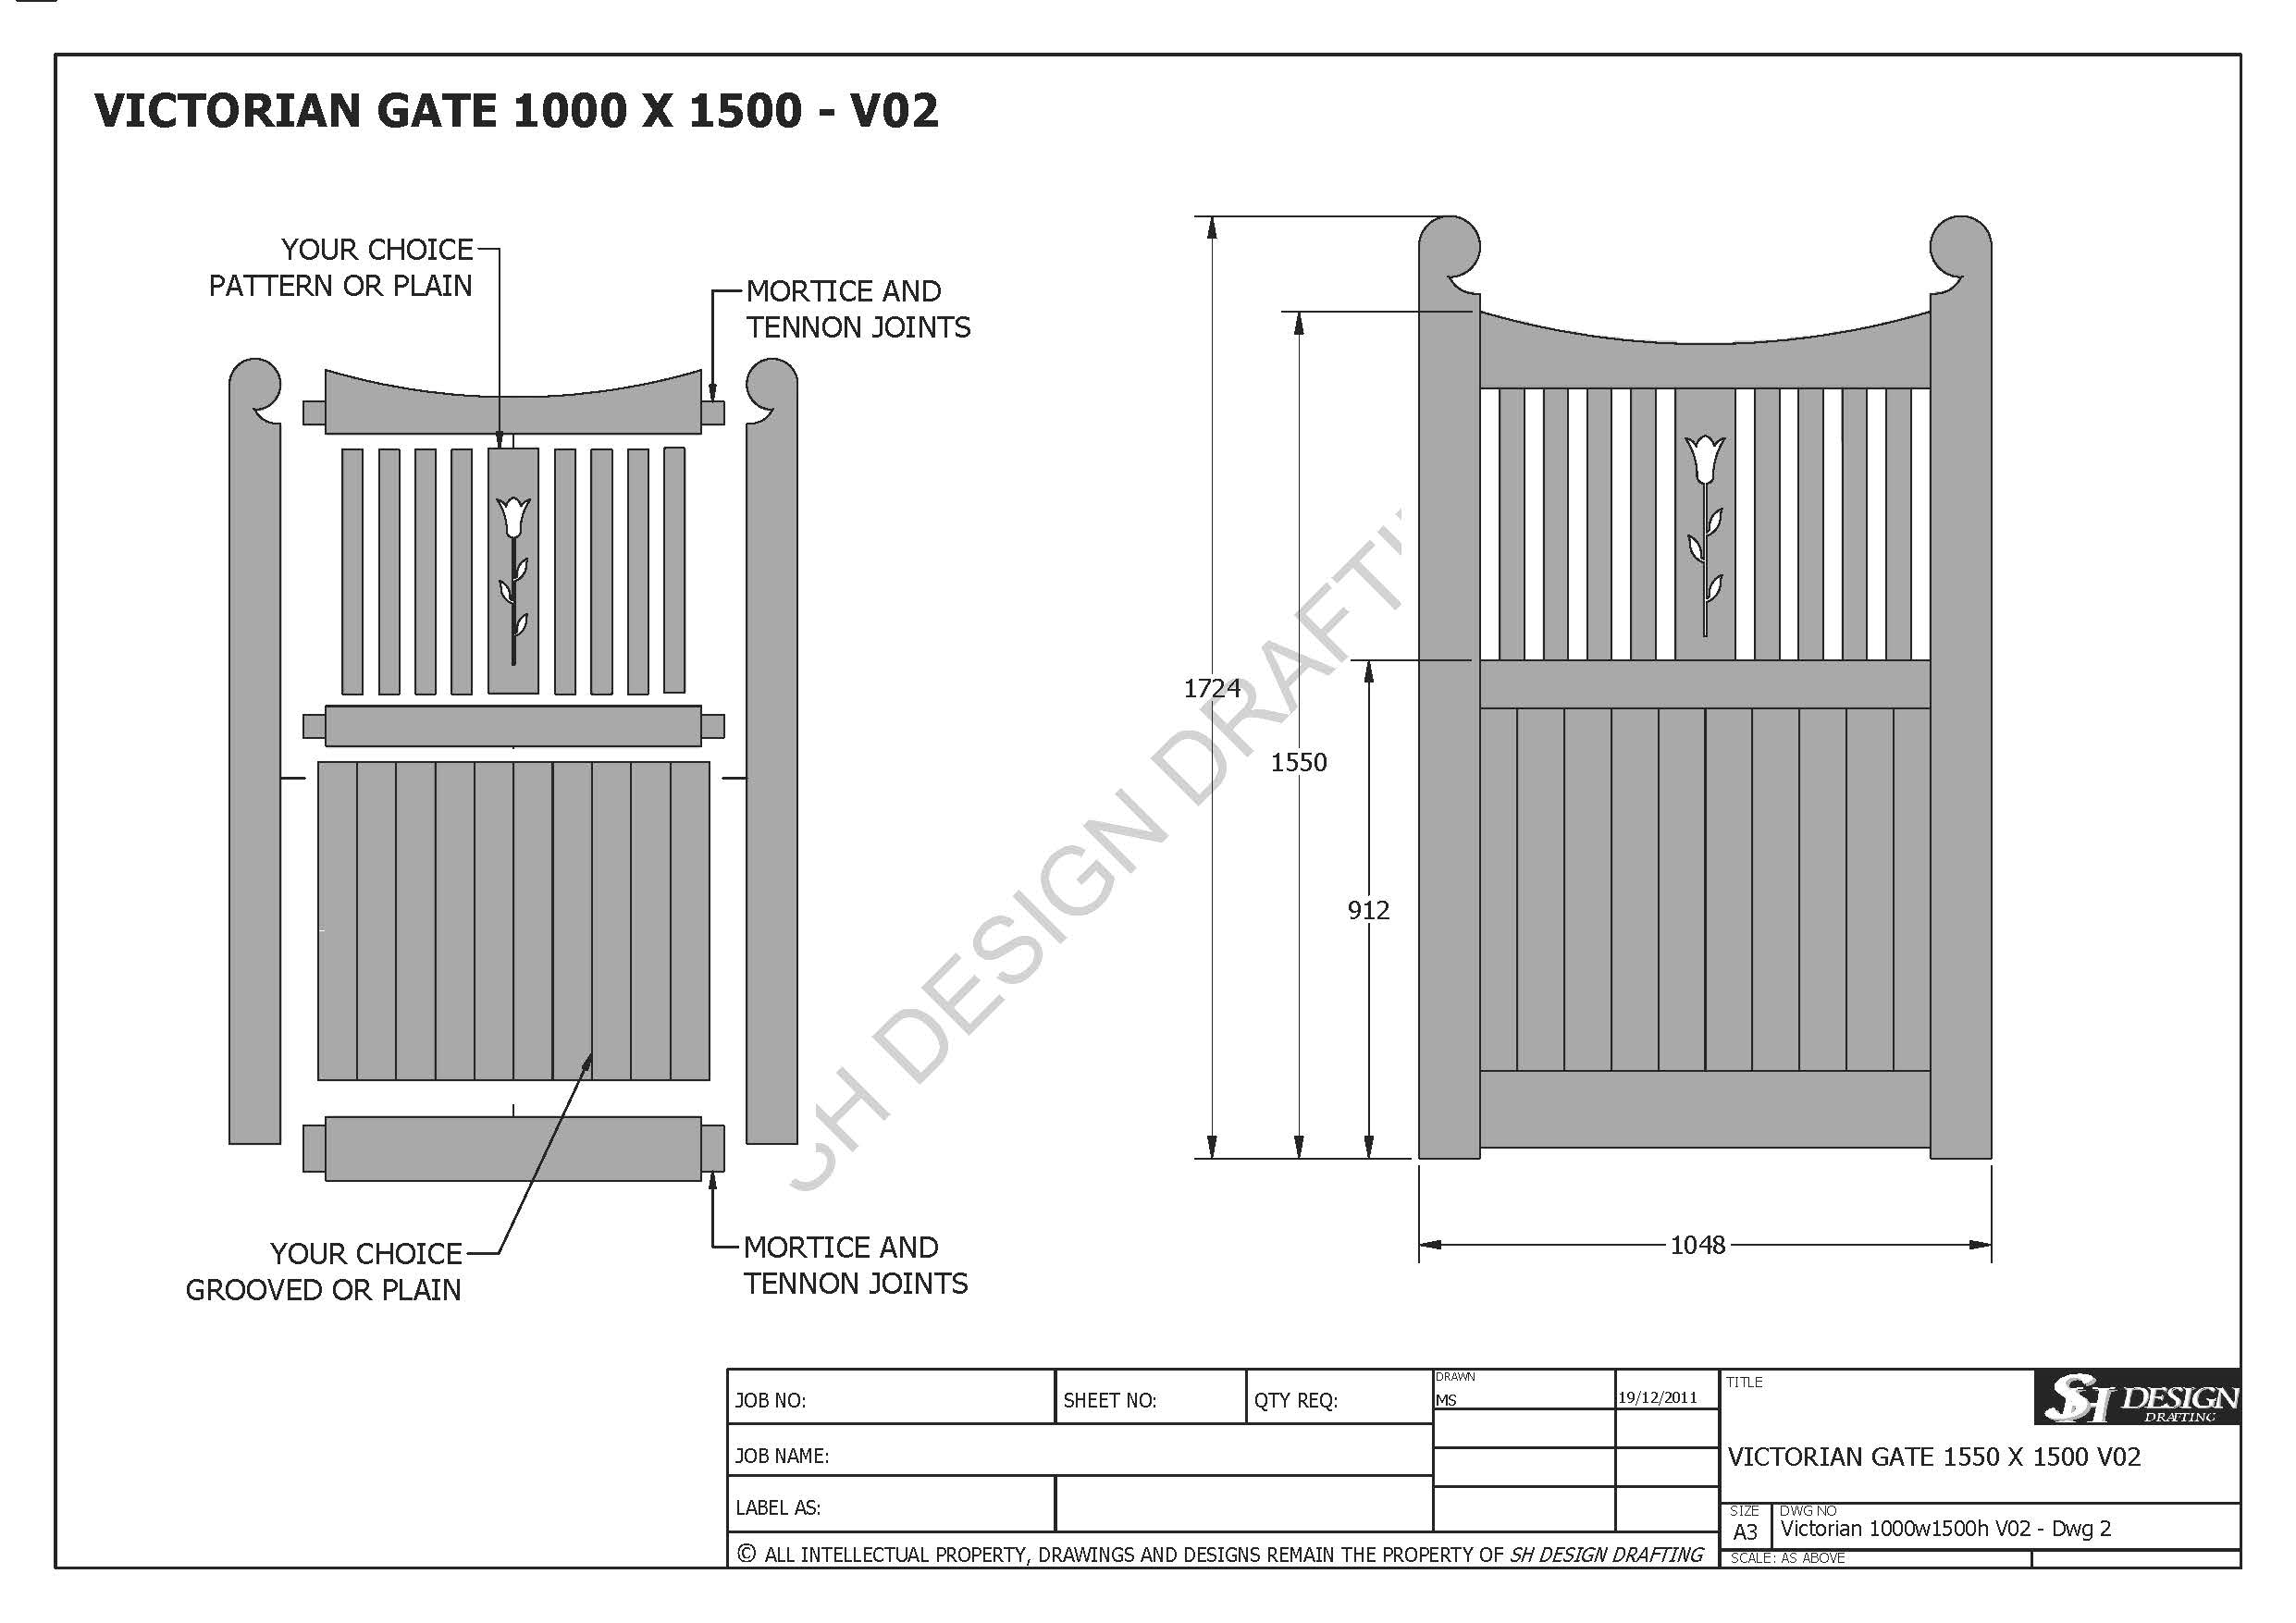 Victorian Gate 1000 x 1500 - V02